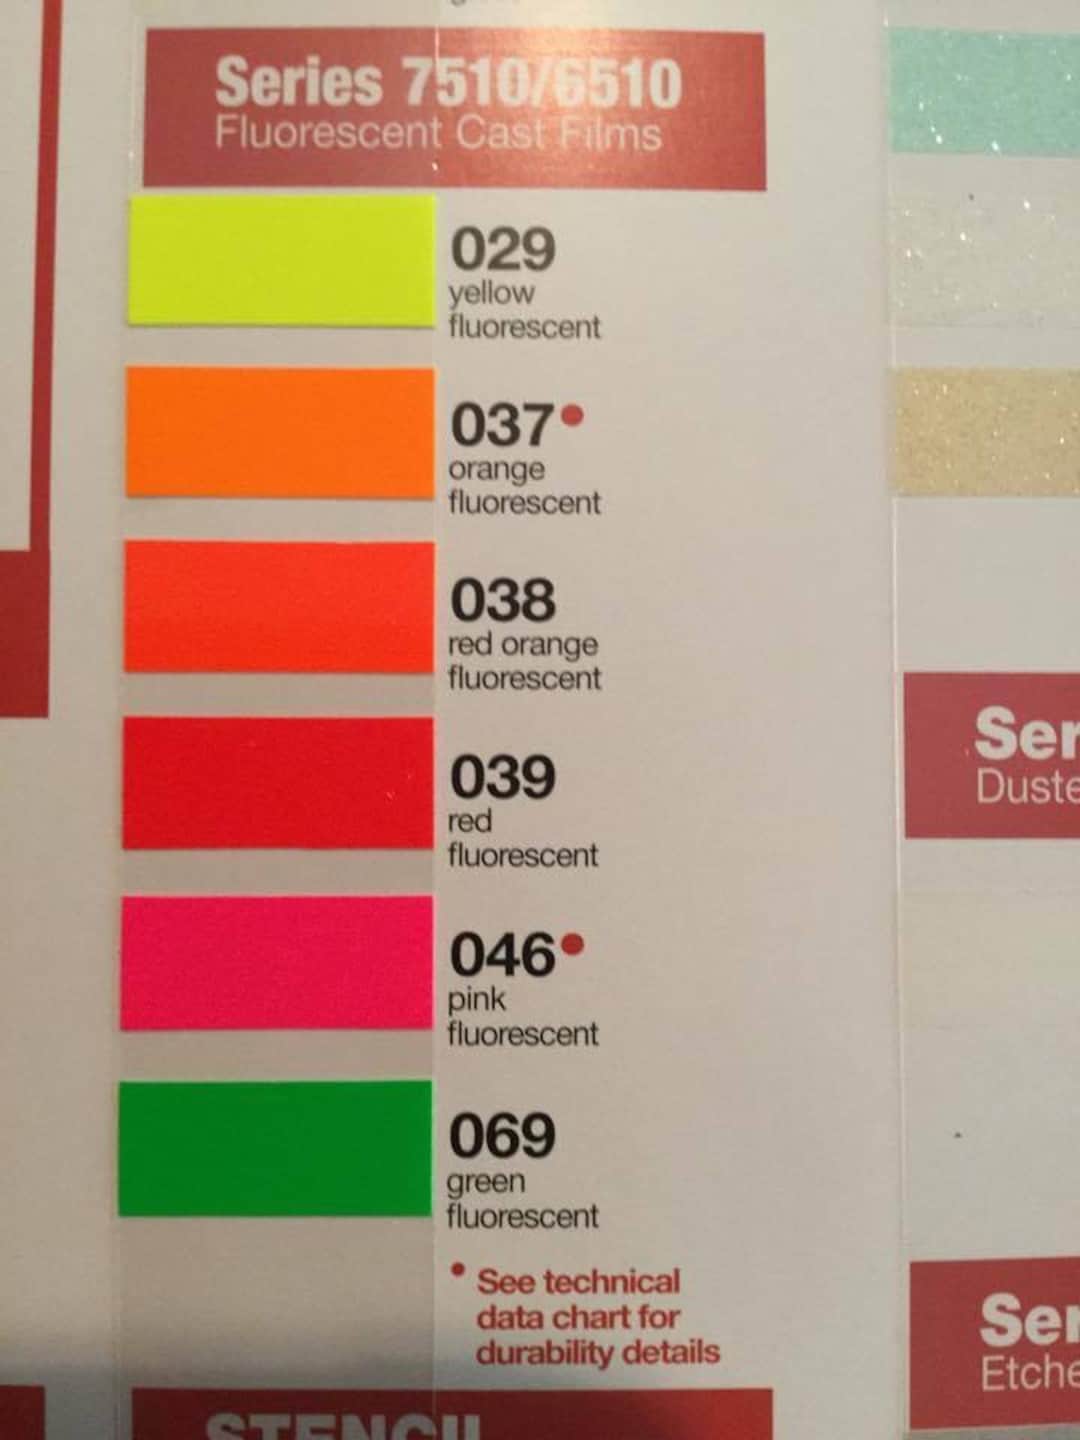 All Colors Oracal 6510 Fluorescent Adhesive Vinyl Bundle